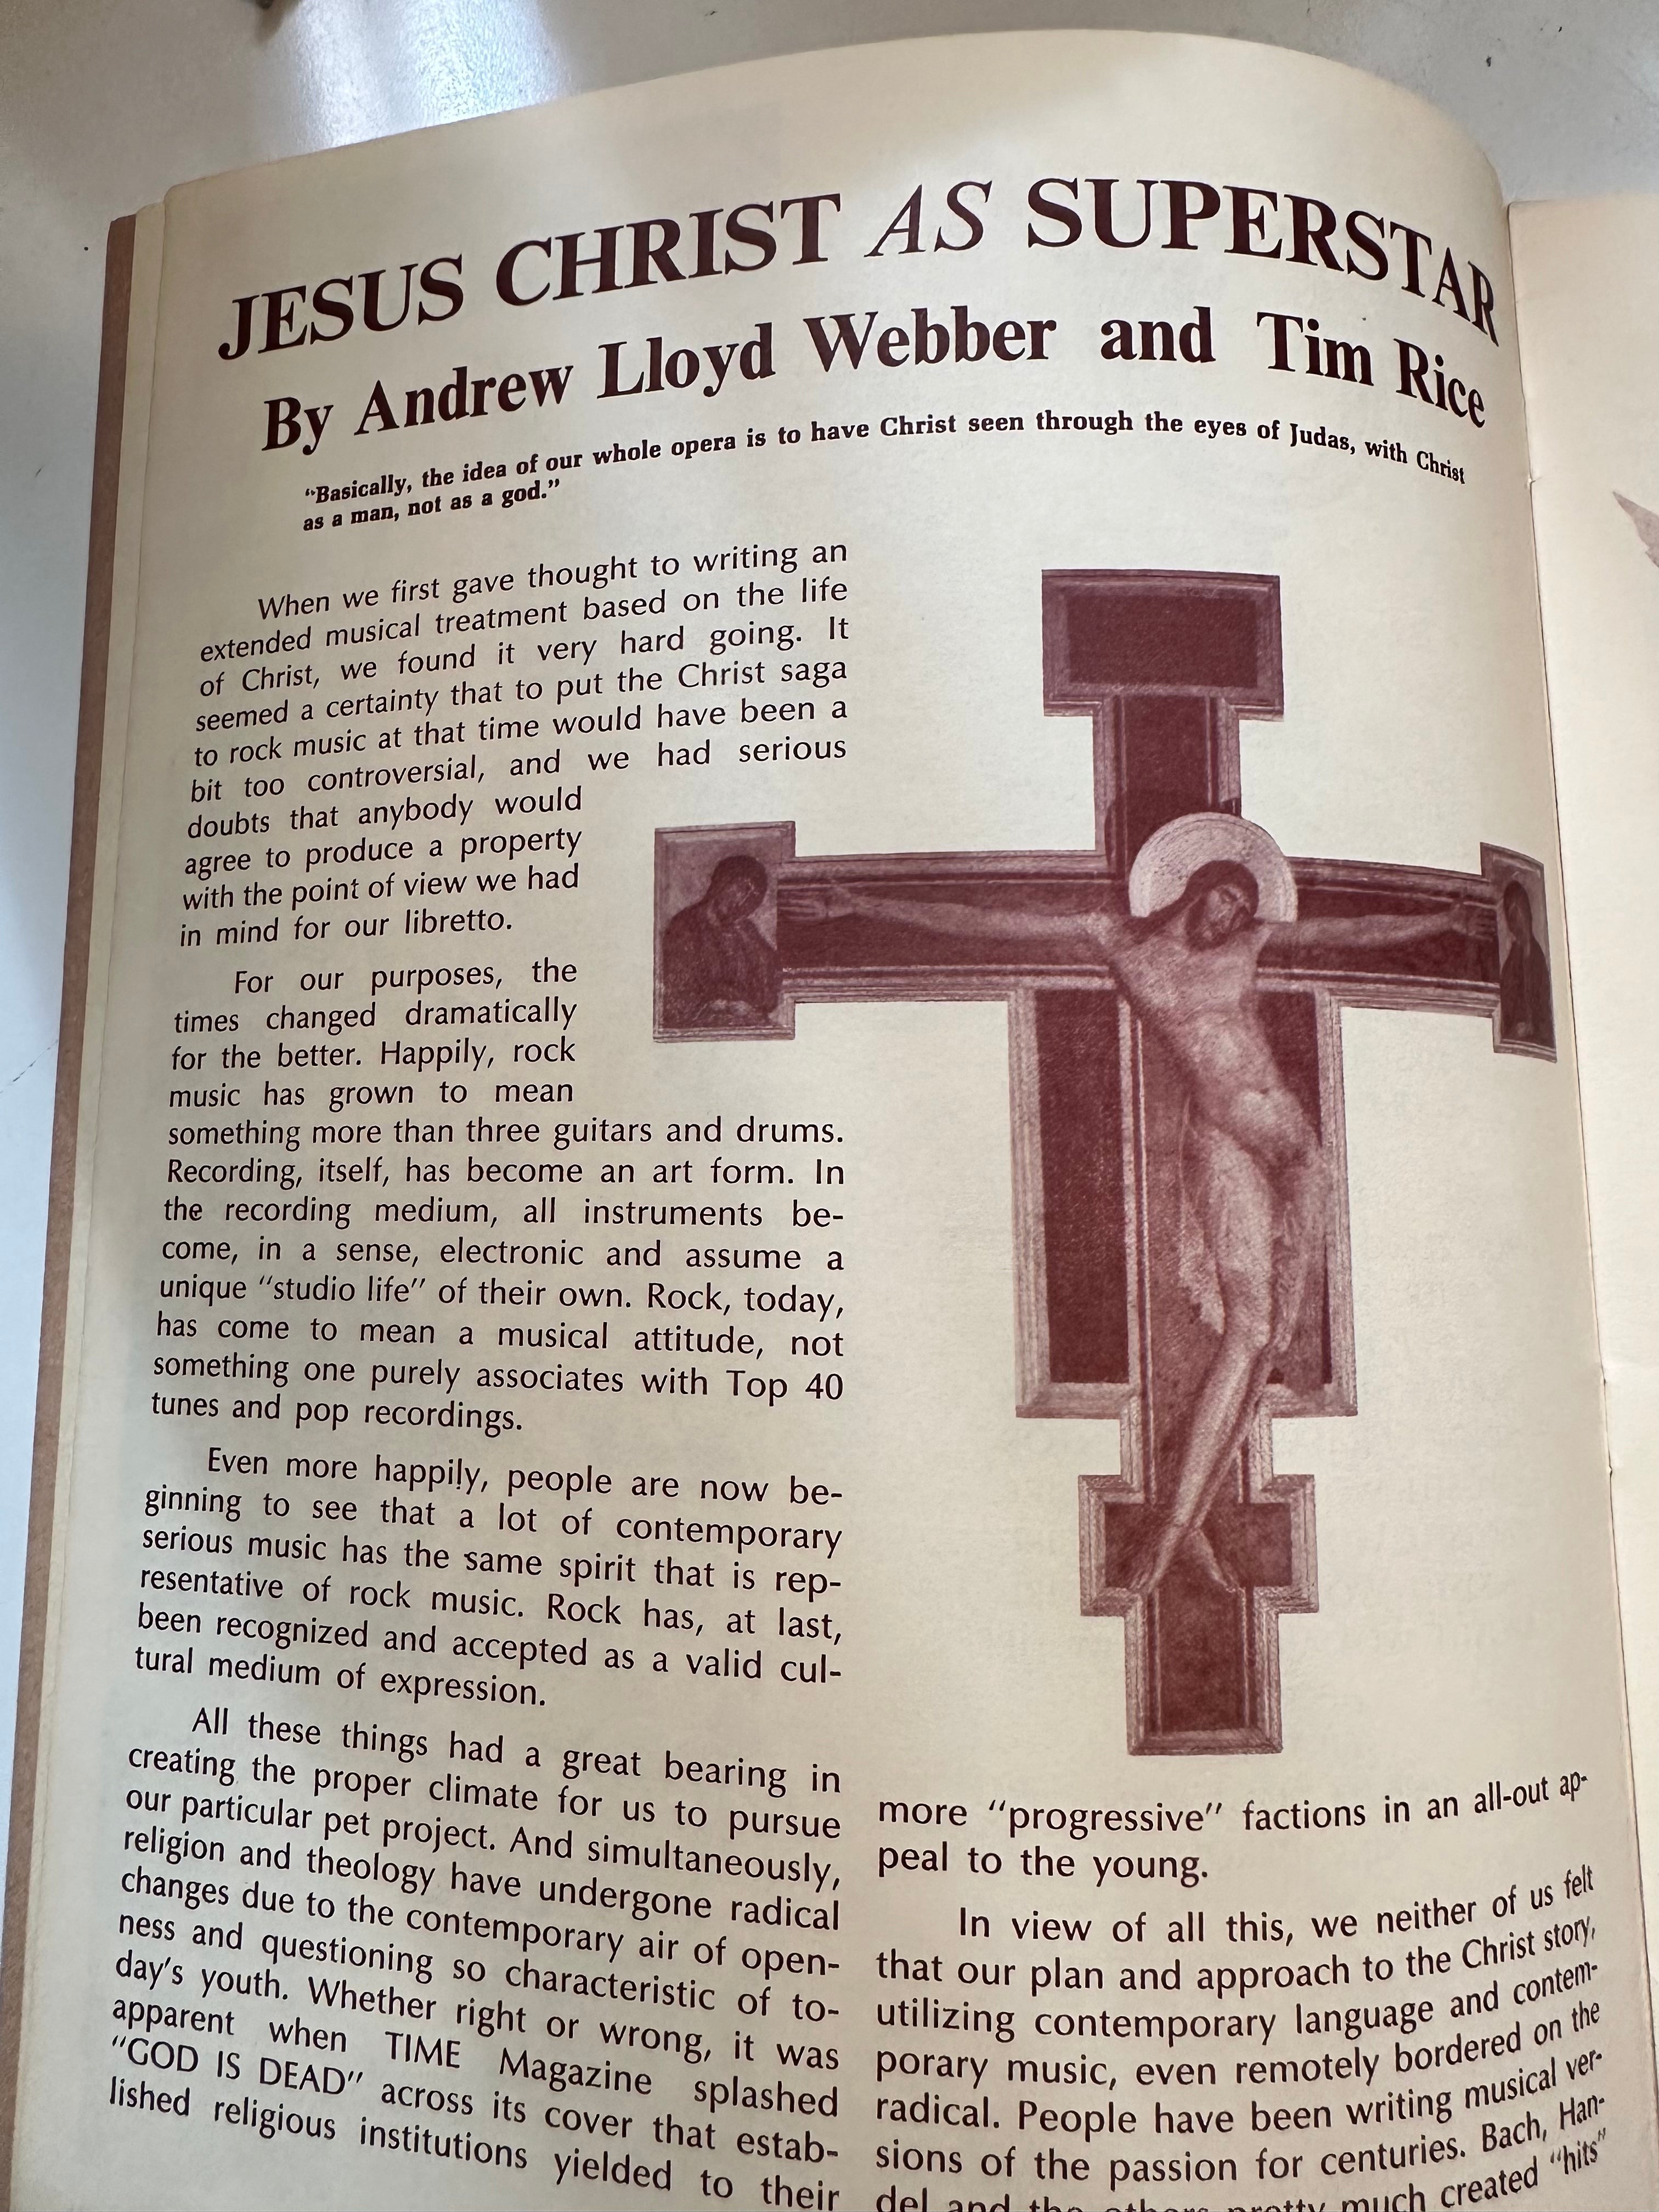 Jesus Christ Superstar rare play program with playbill booklet 1970